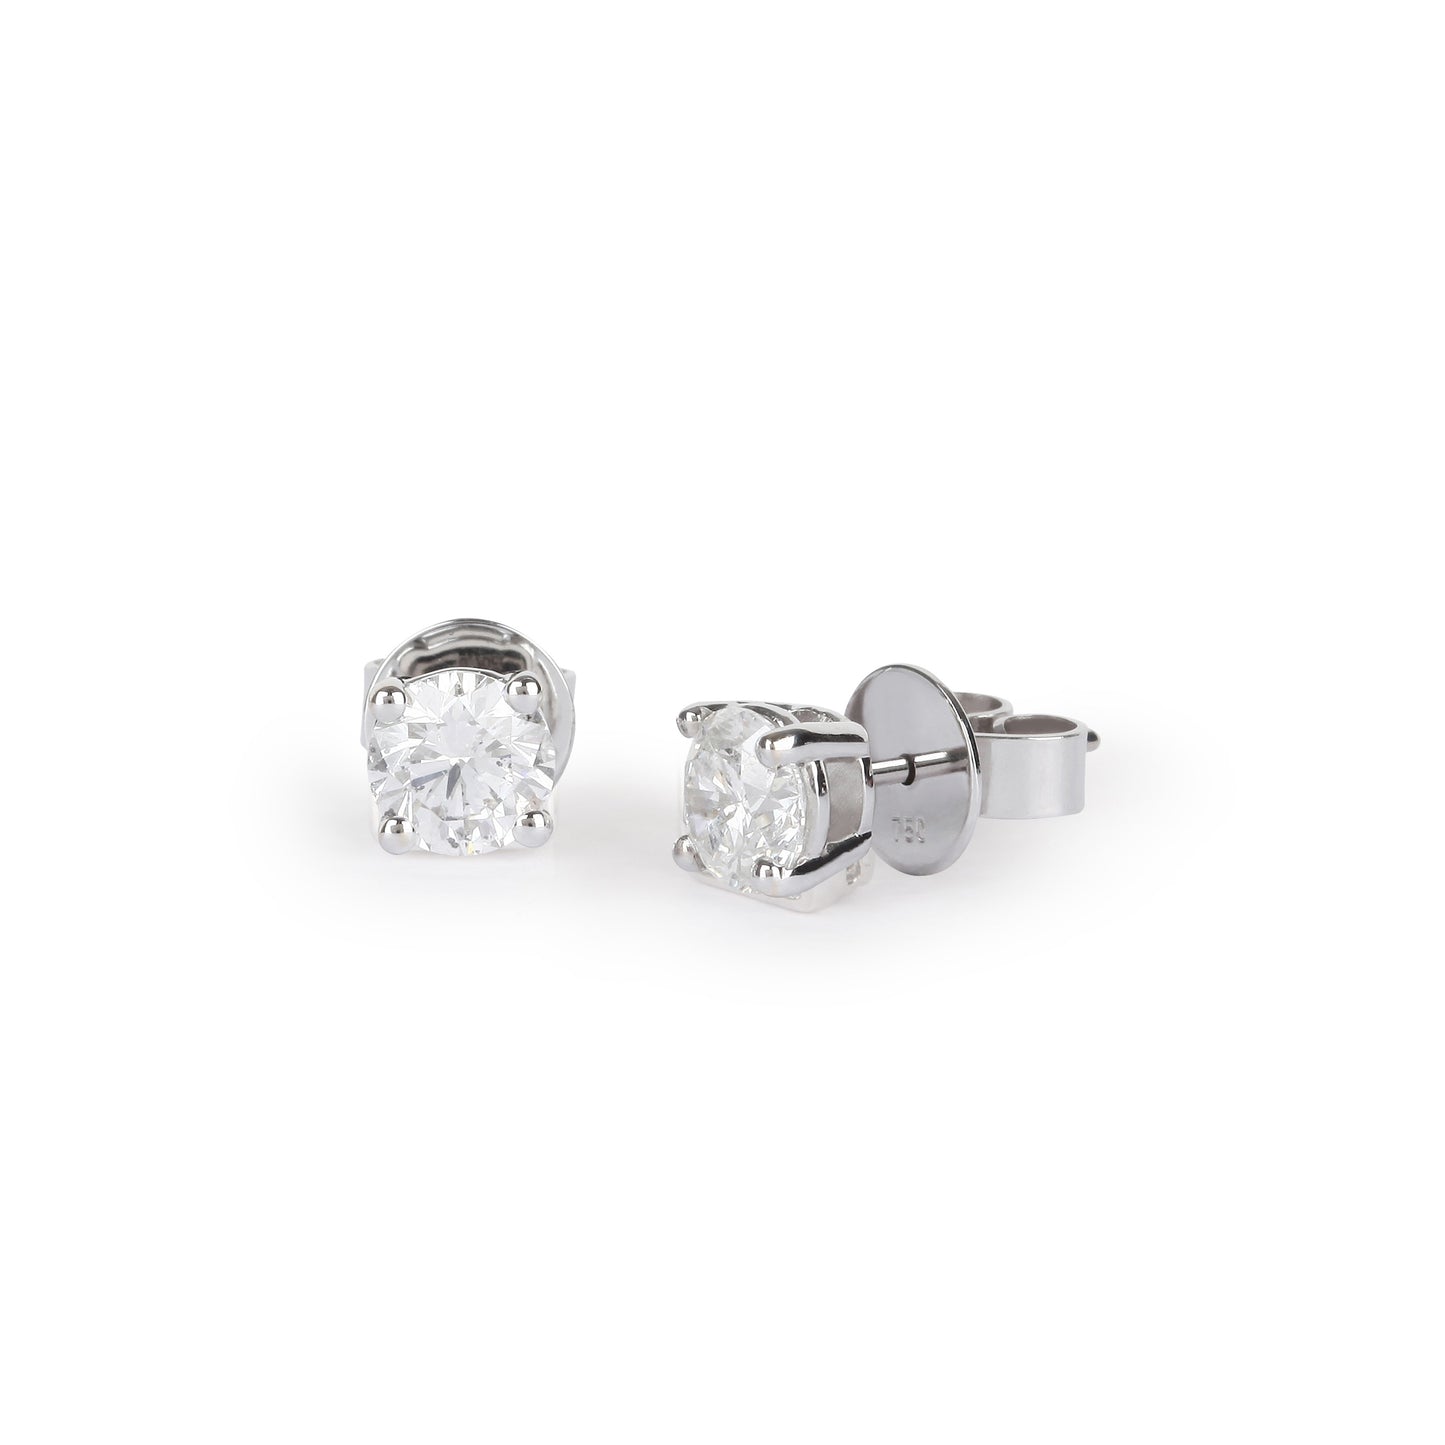 Certified Solitaire Diamond Stud Earrings | Best Diamond Stud Earrings